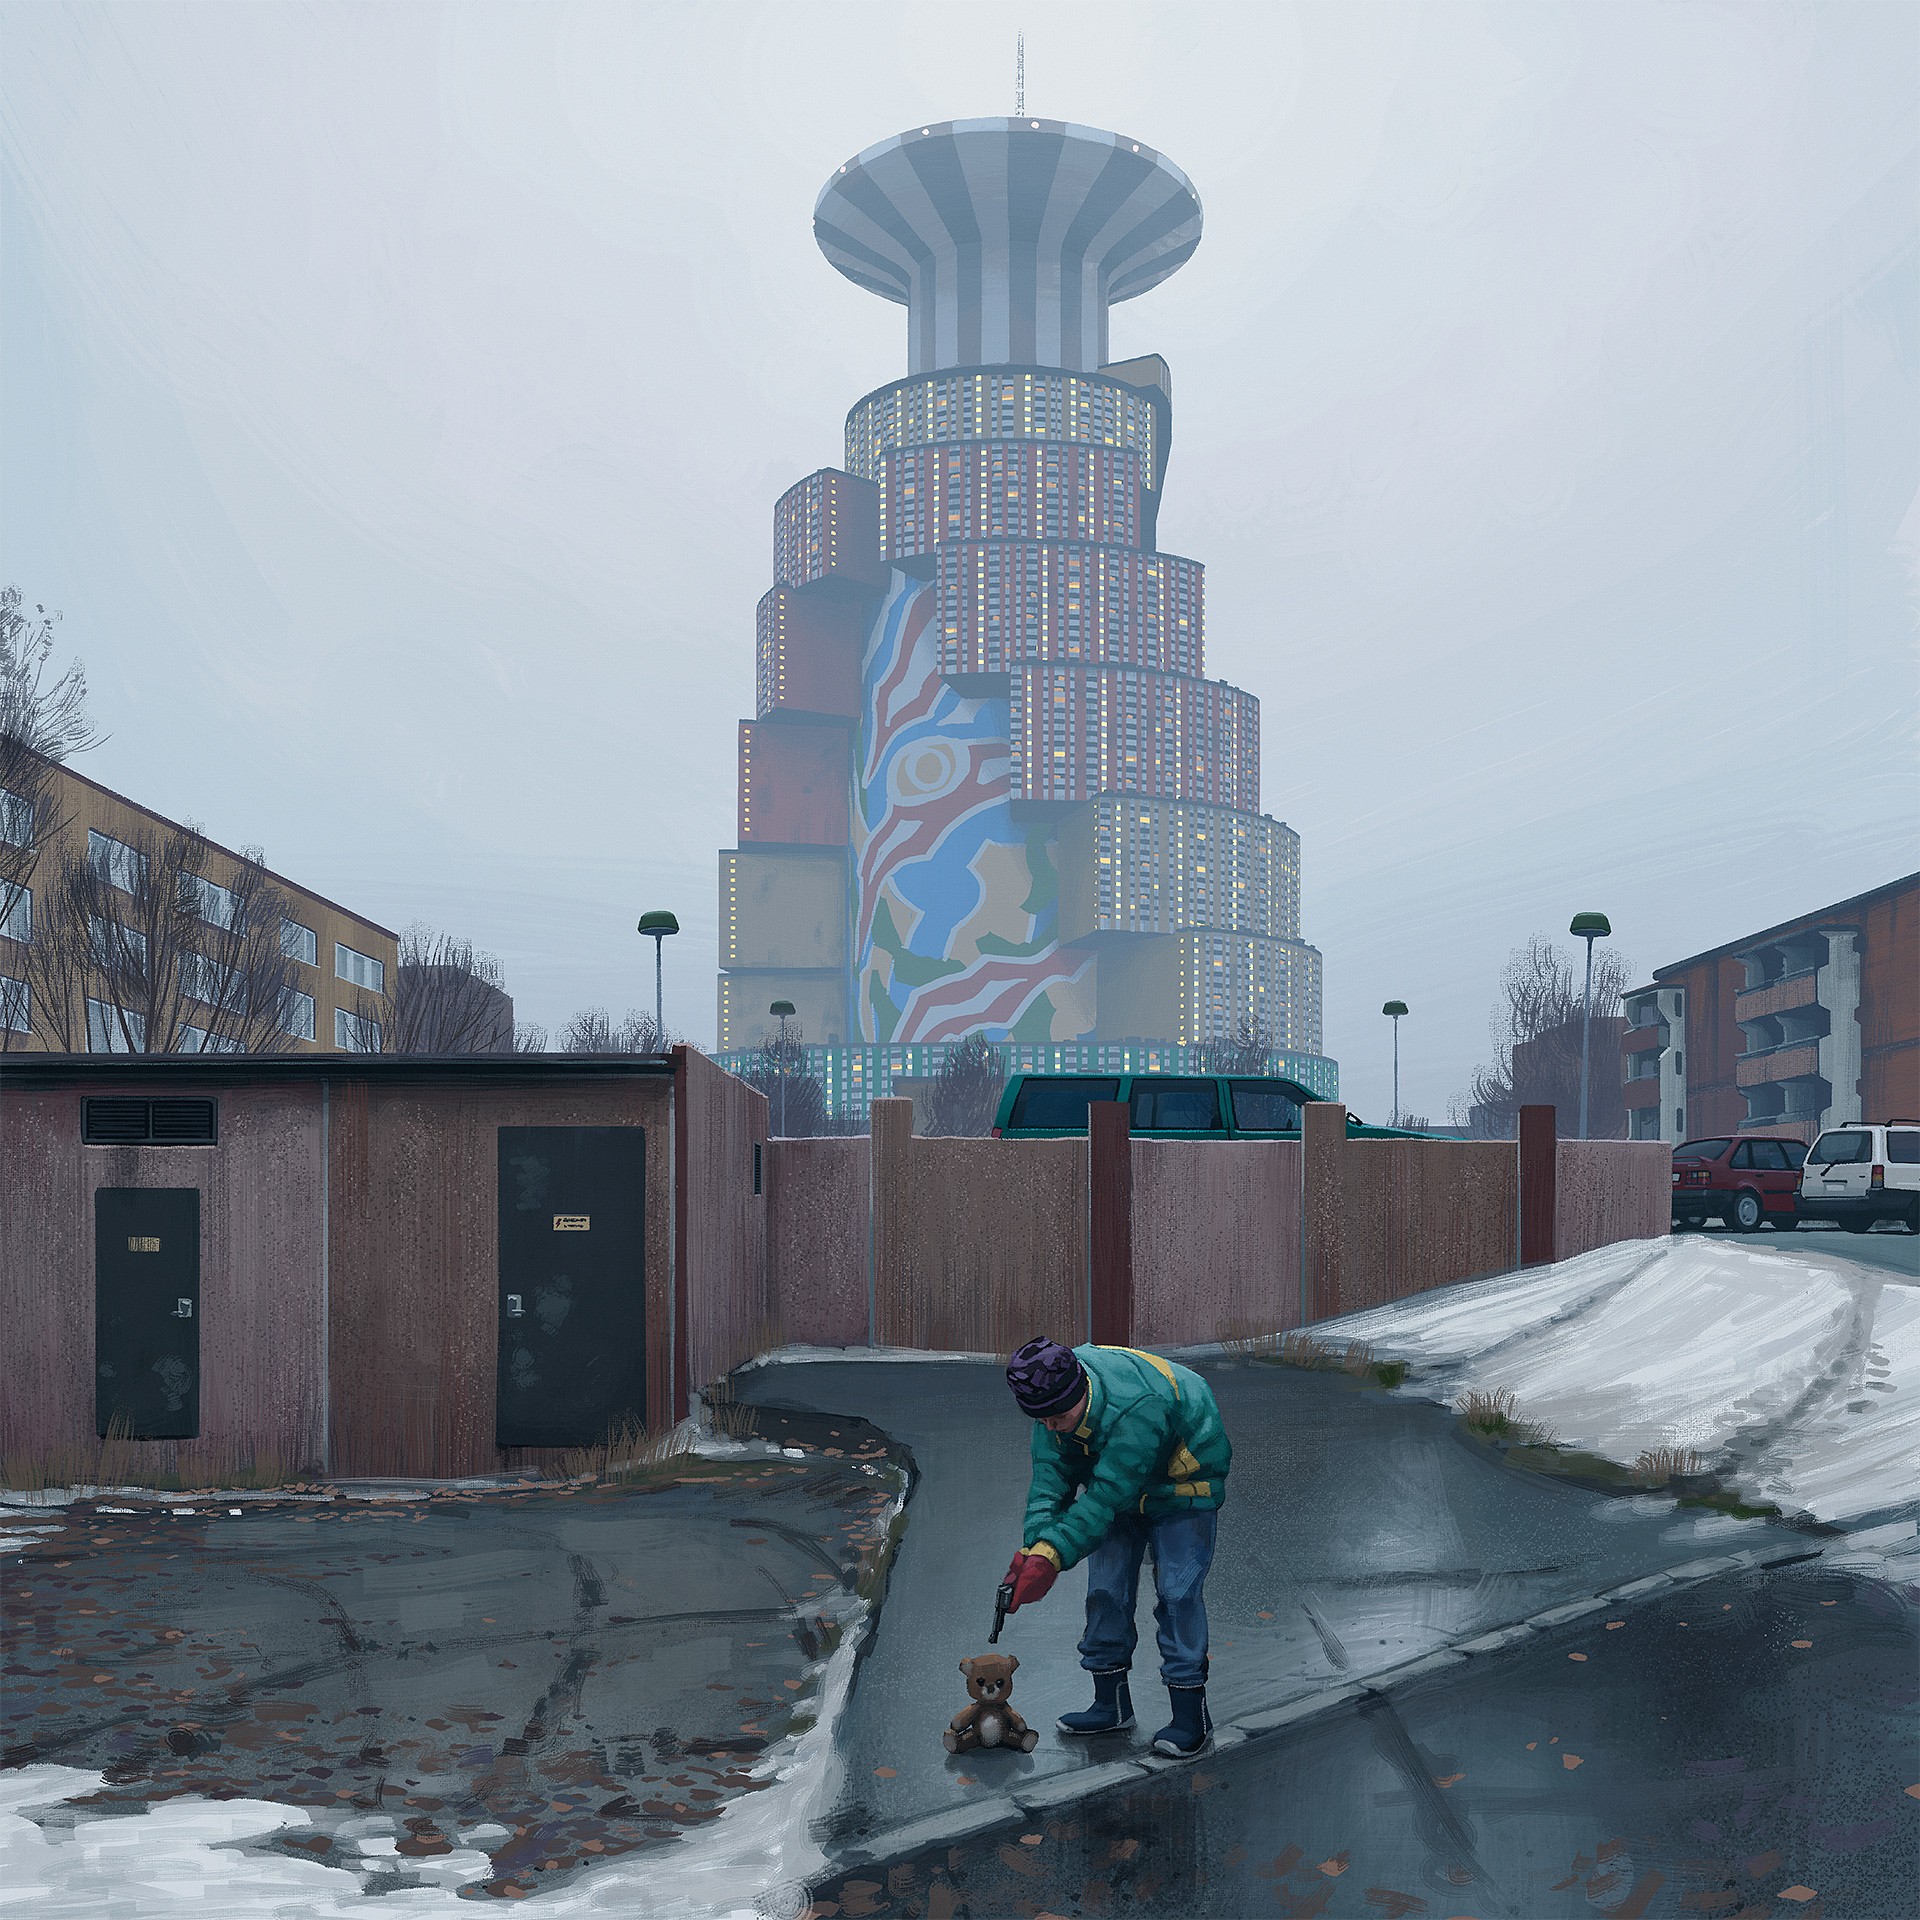 General 1920x1920 Simon Stålenhag digital art teddy bears urban Russia gun weapon plush toy tower